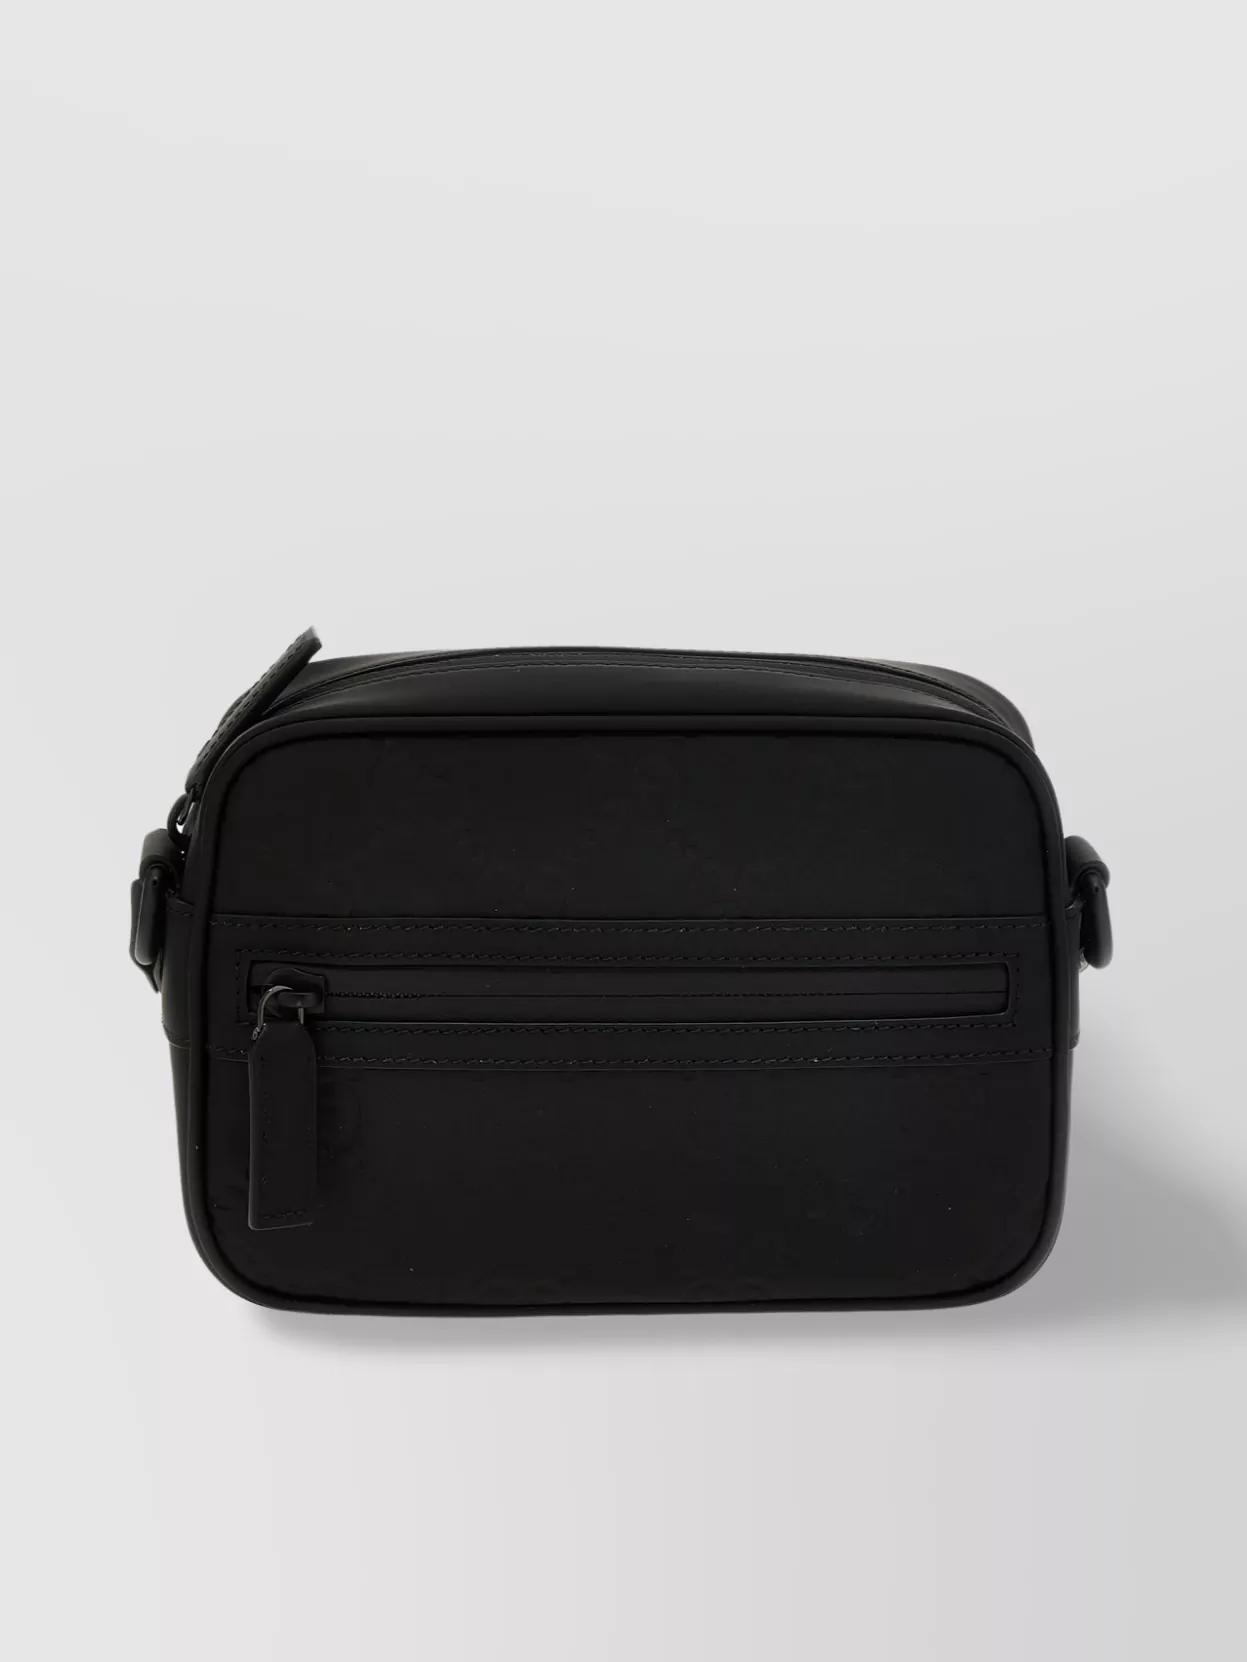 Gucci Gg Supreme Mini Shoulder Bag In Black